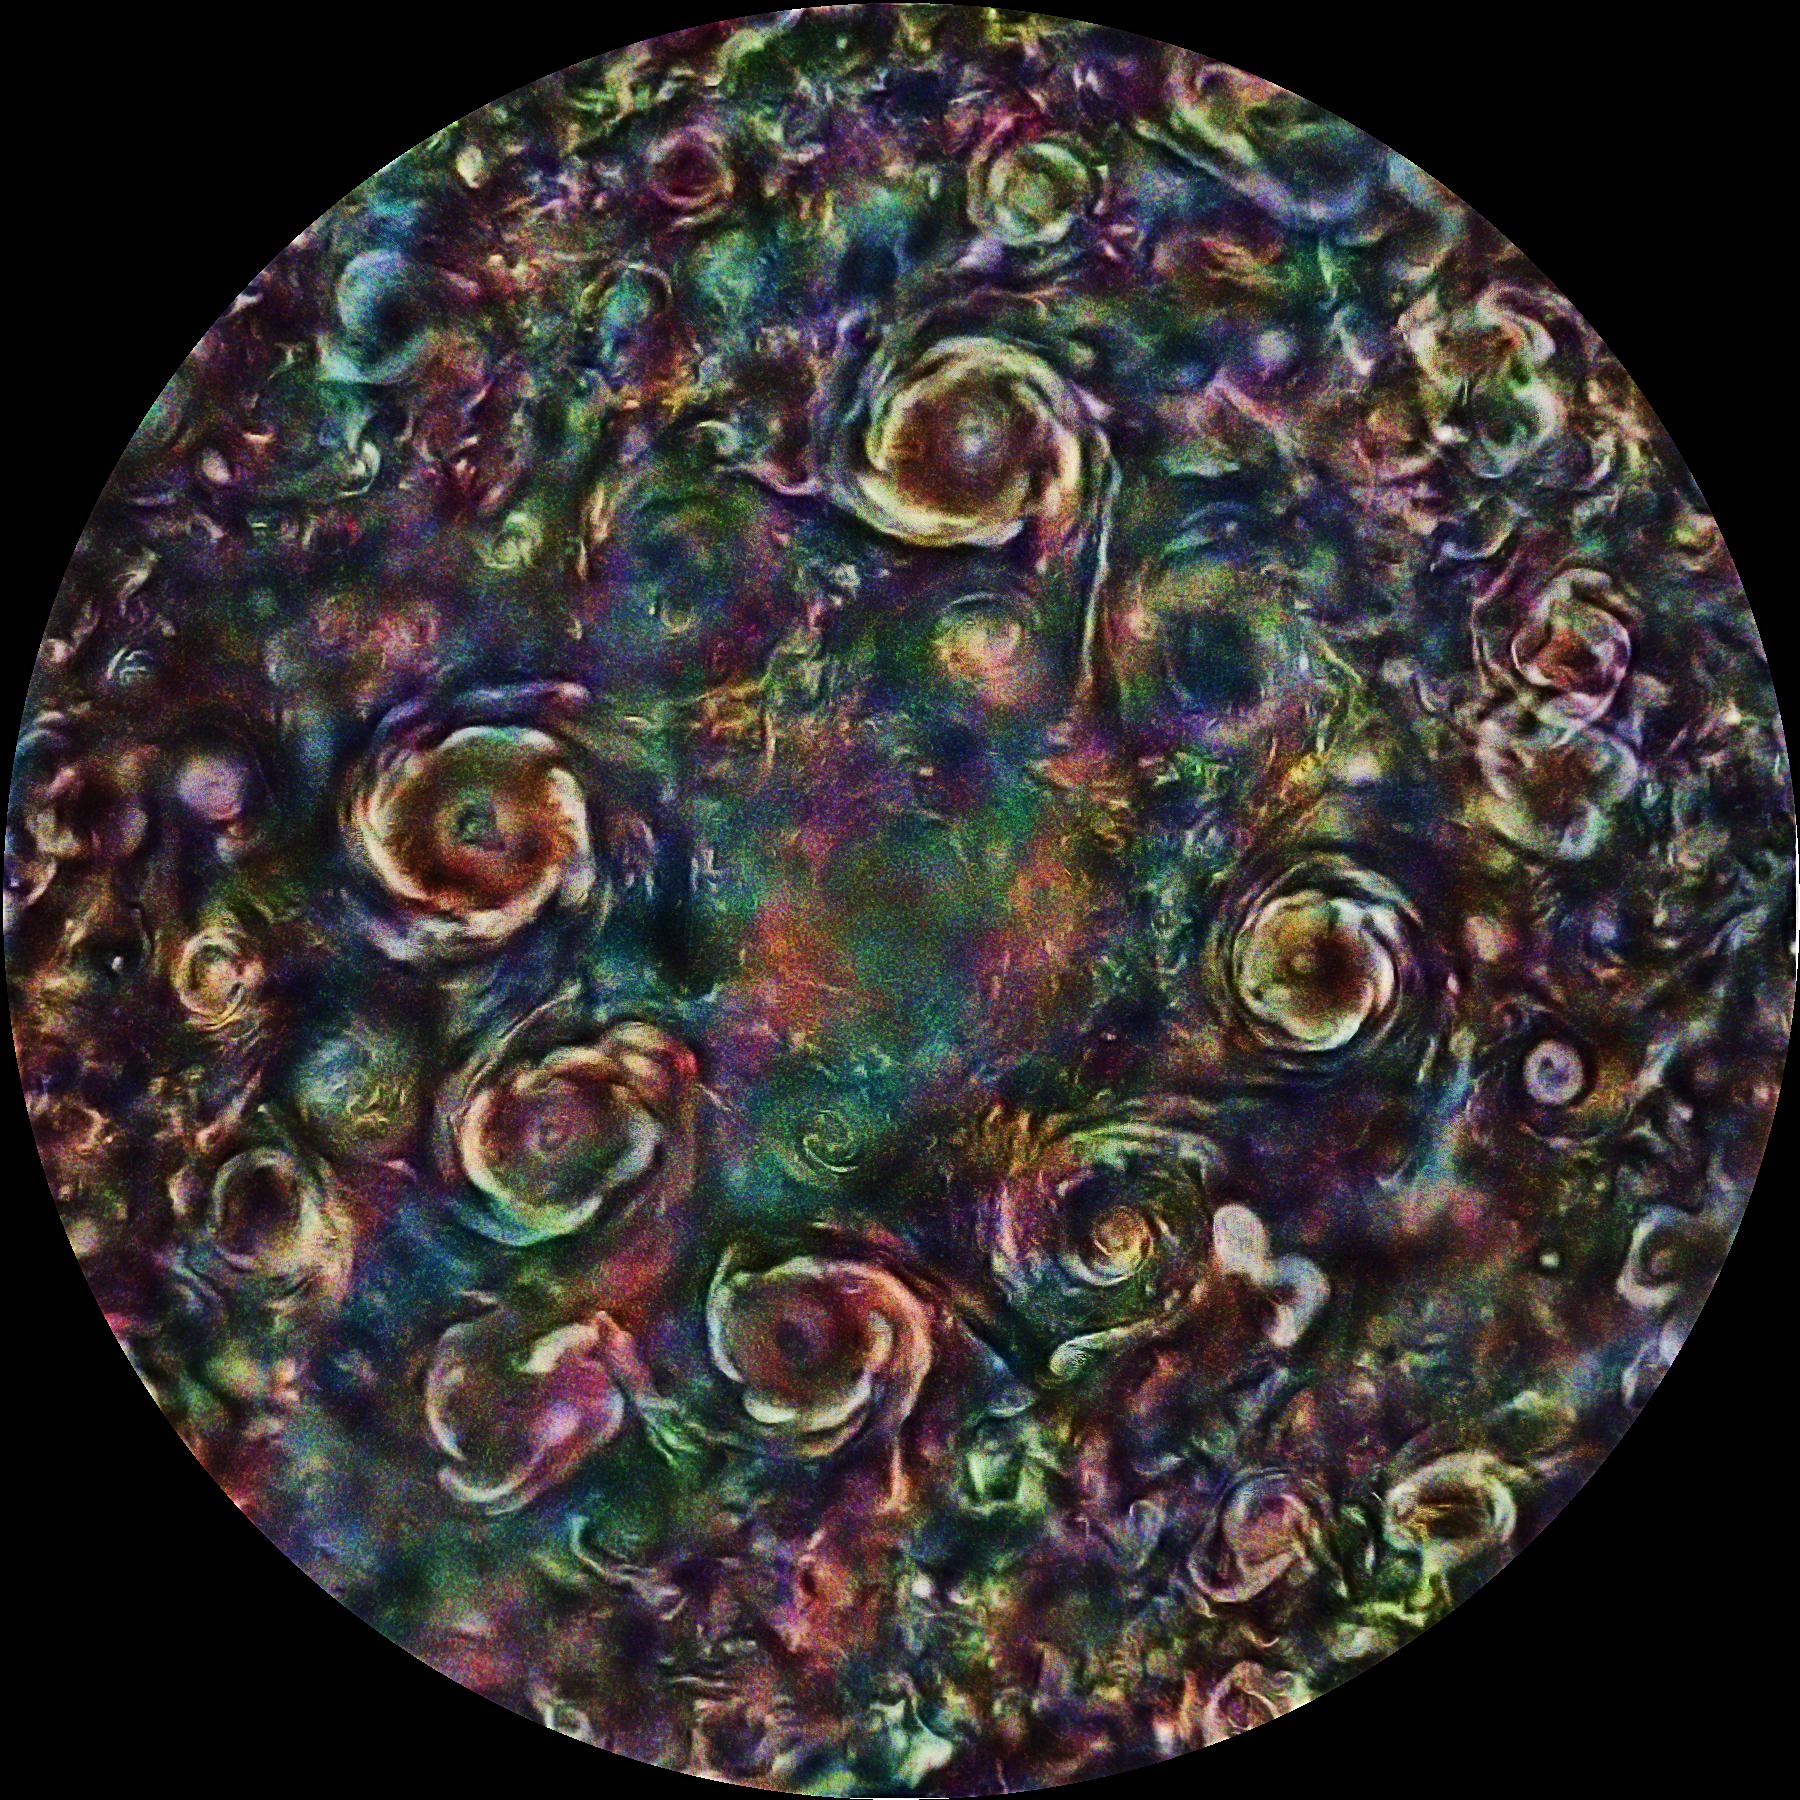 PIA23808: Cyclones of Color at Jupiter's North Pole